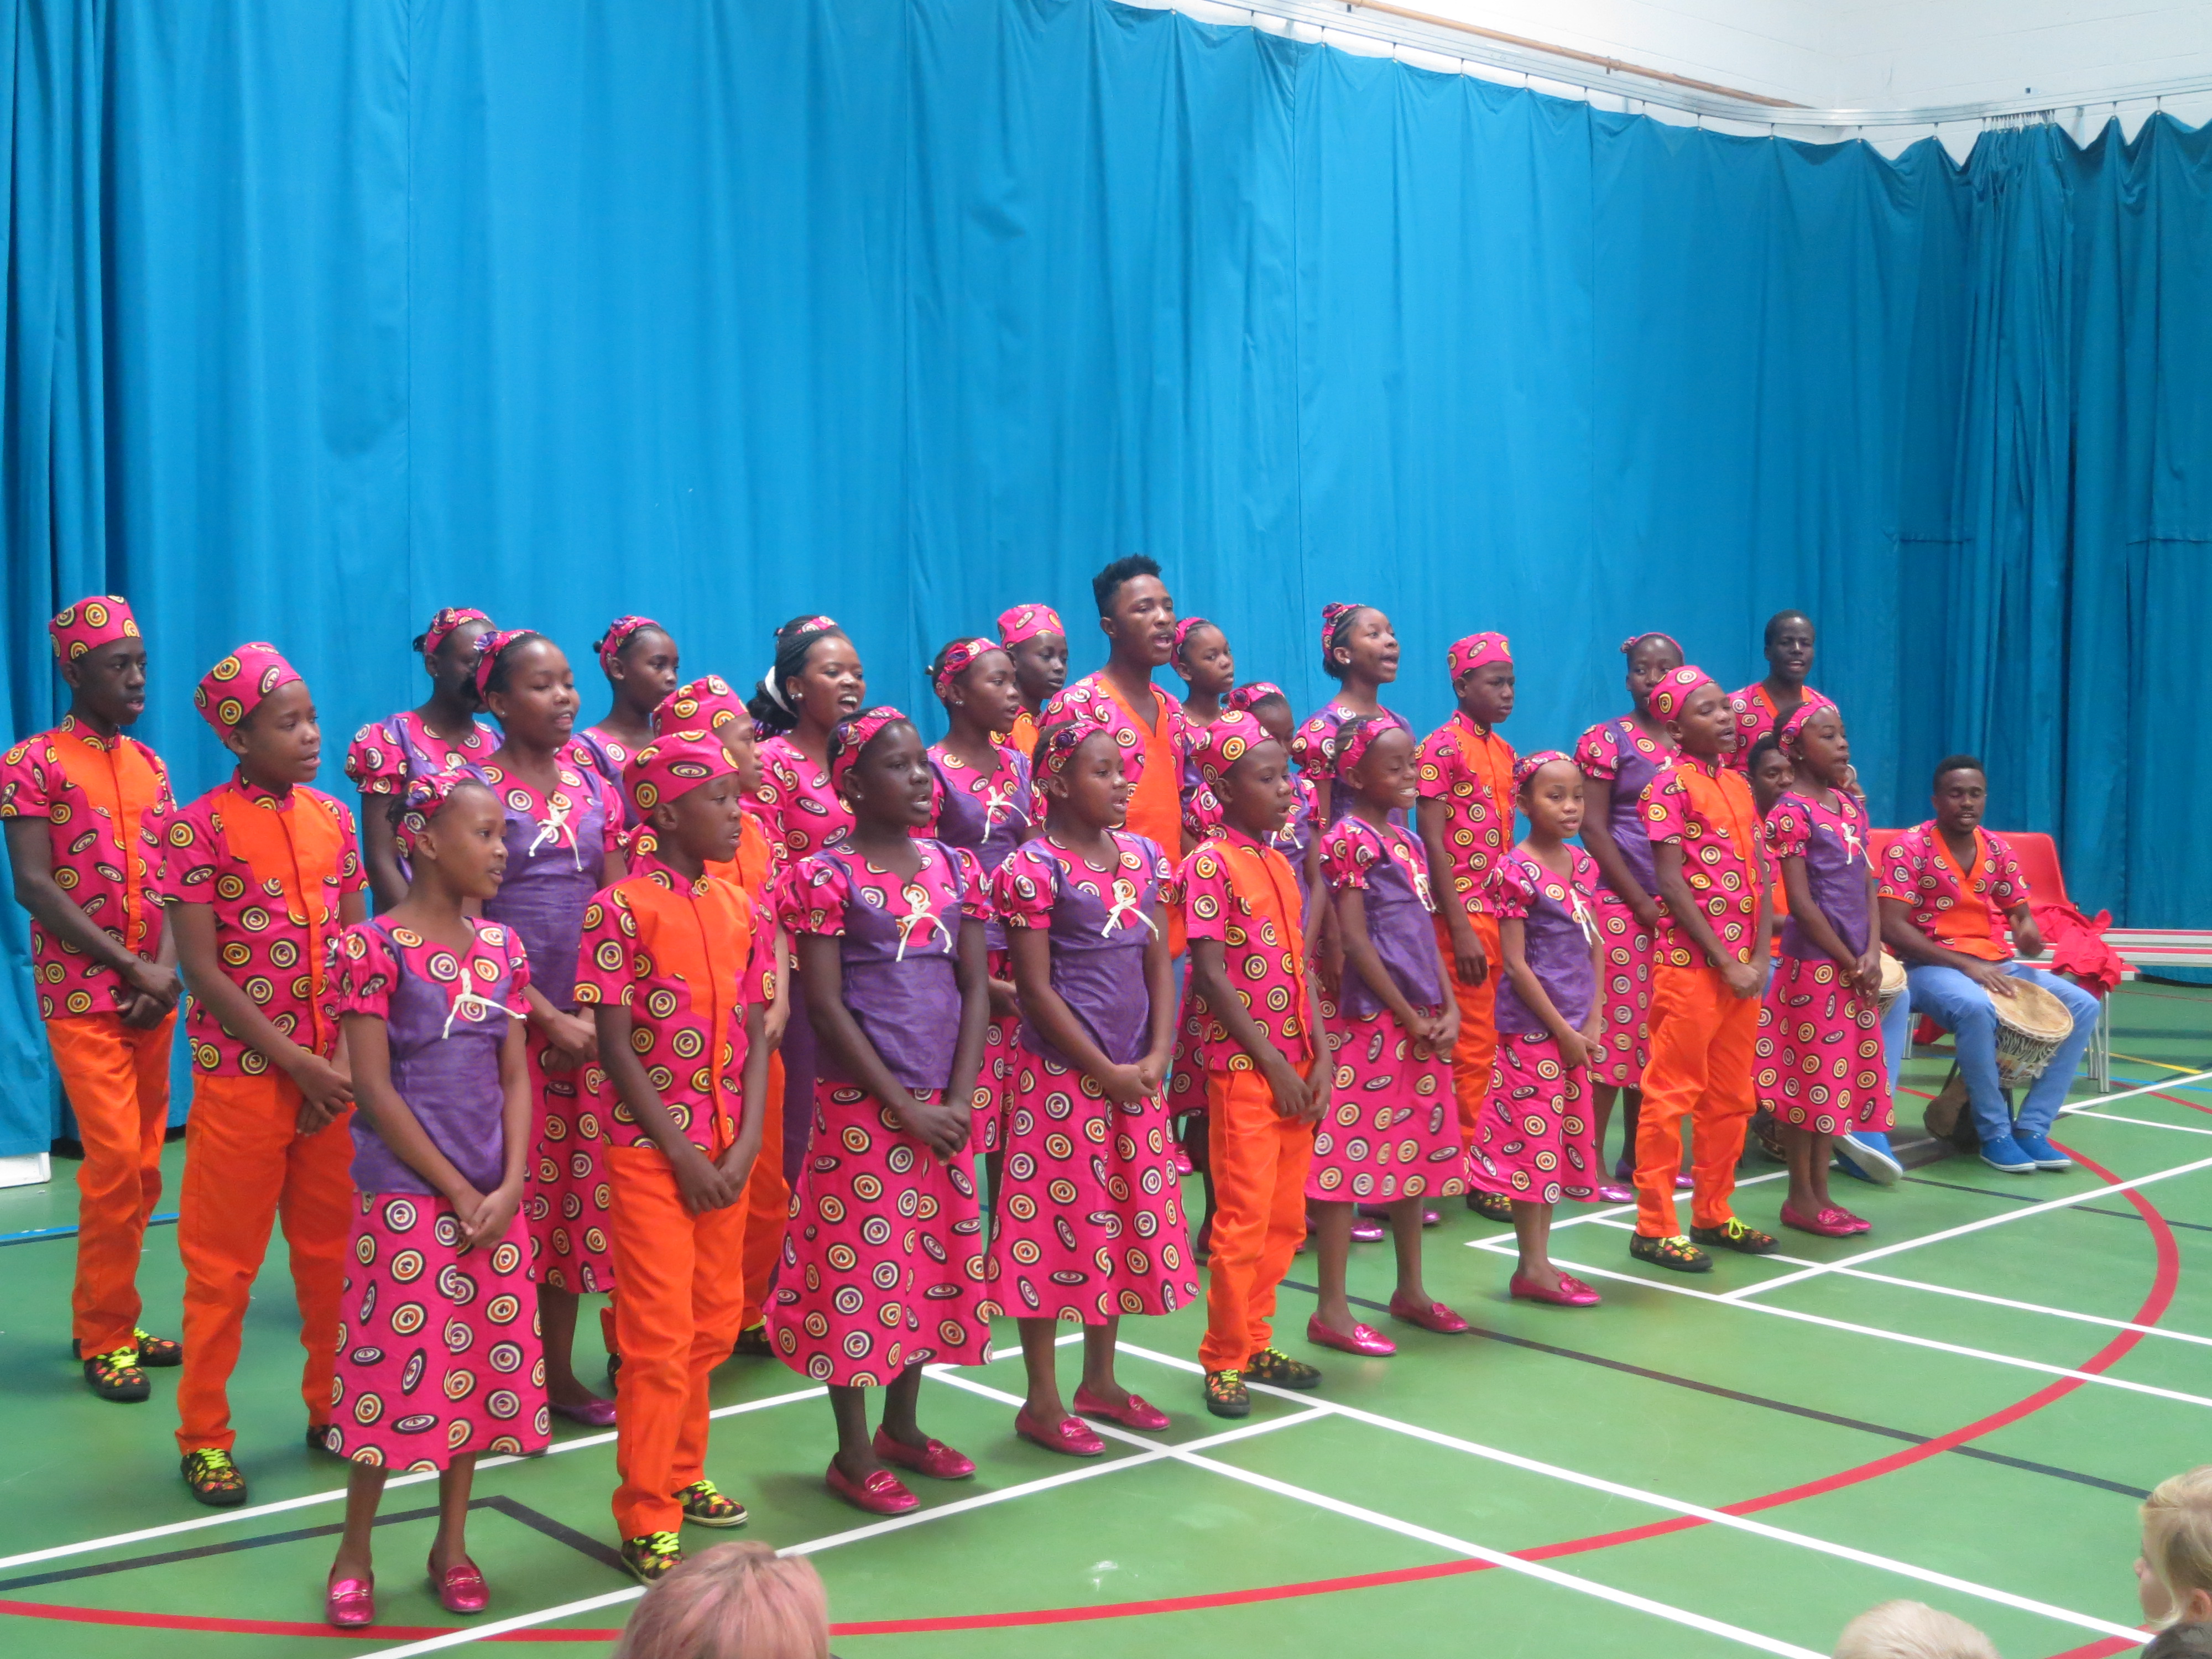 The Singing Children of Africa